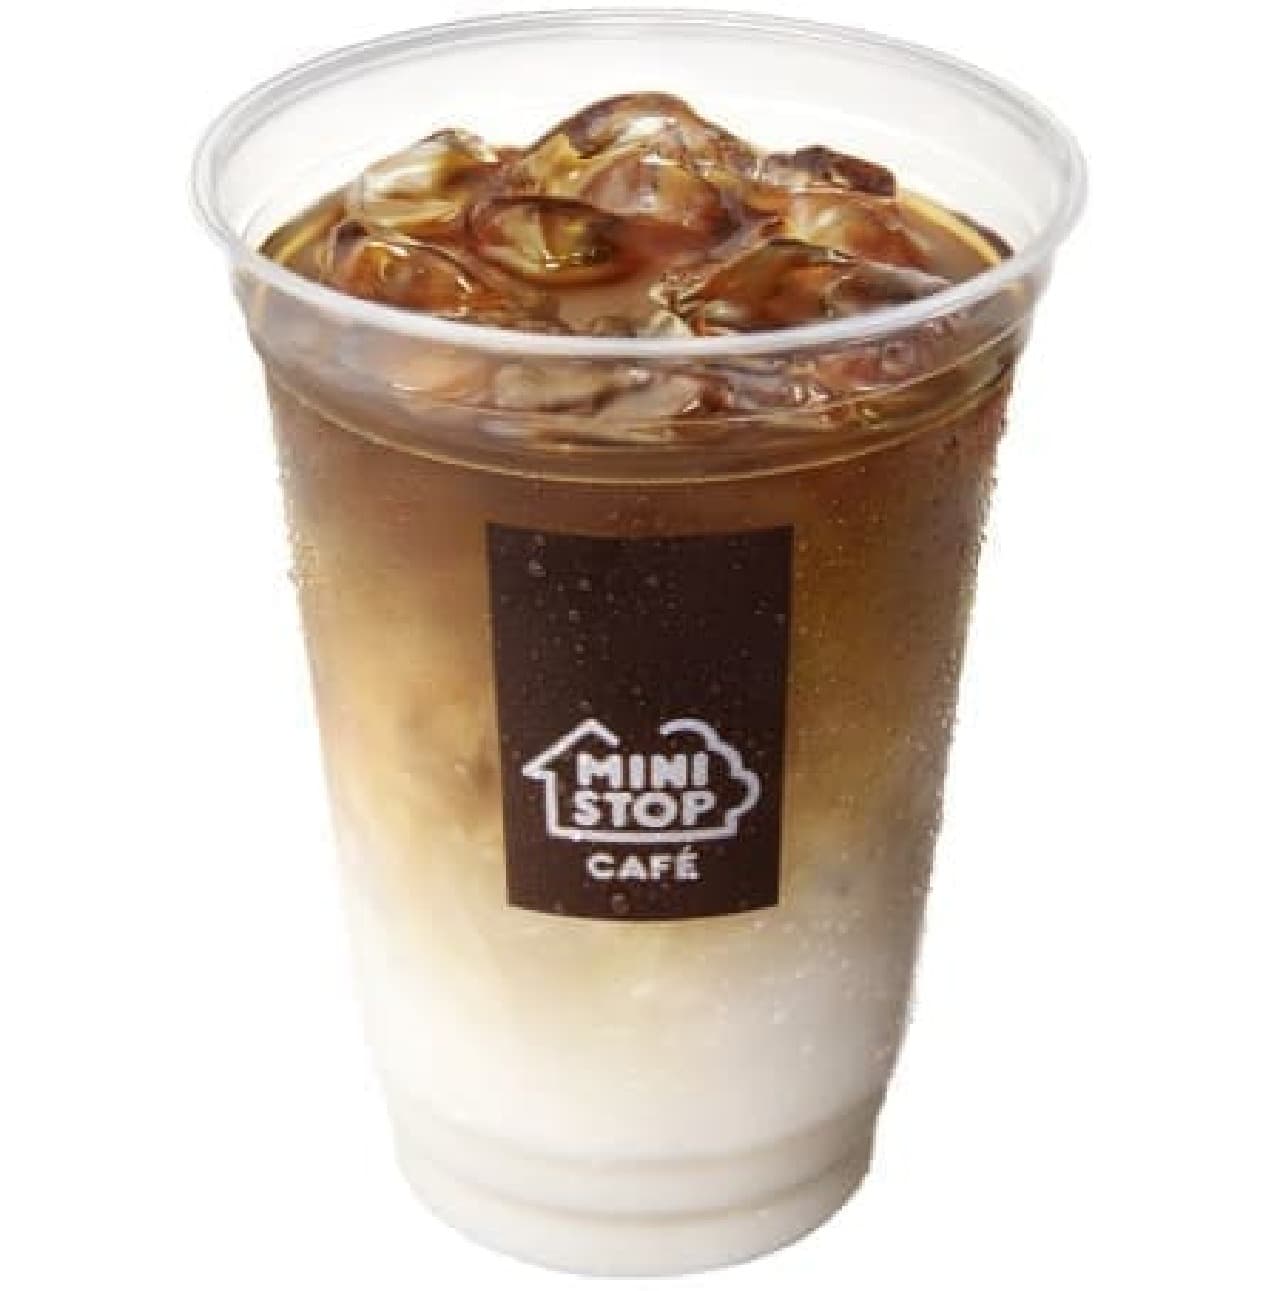 Ministop "Ice Cafe Latte"